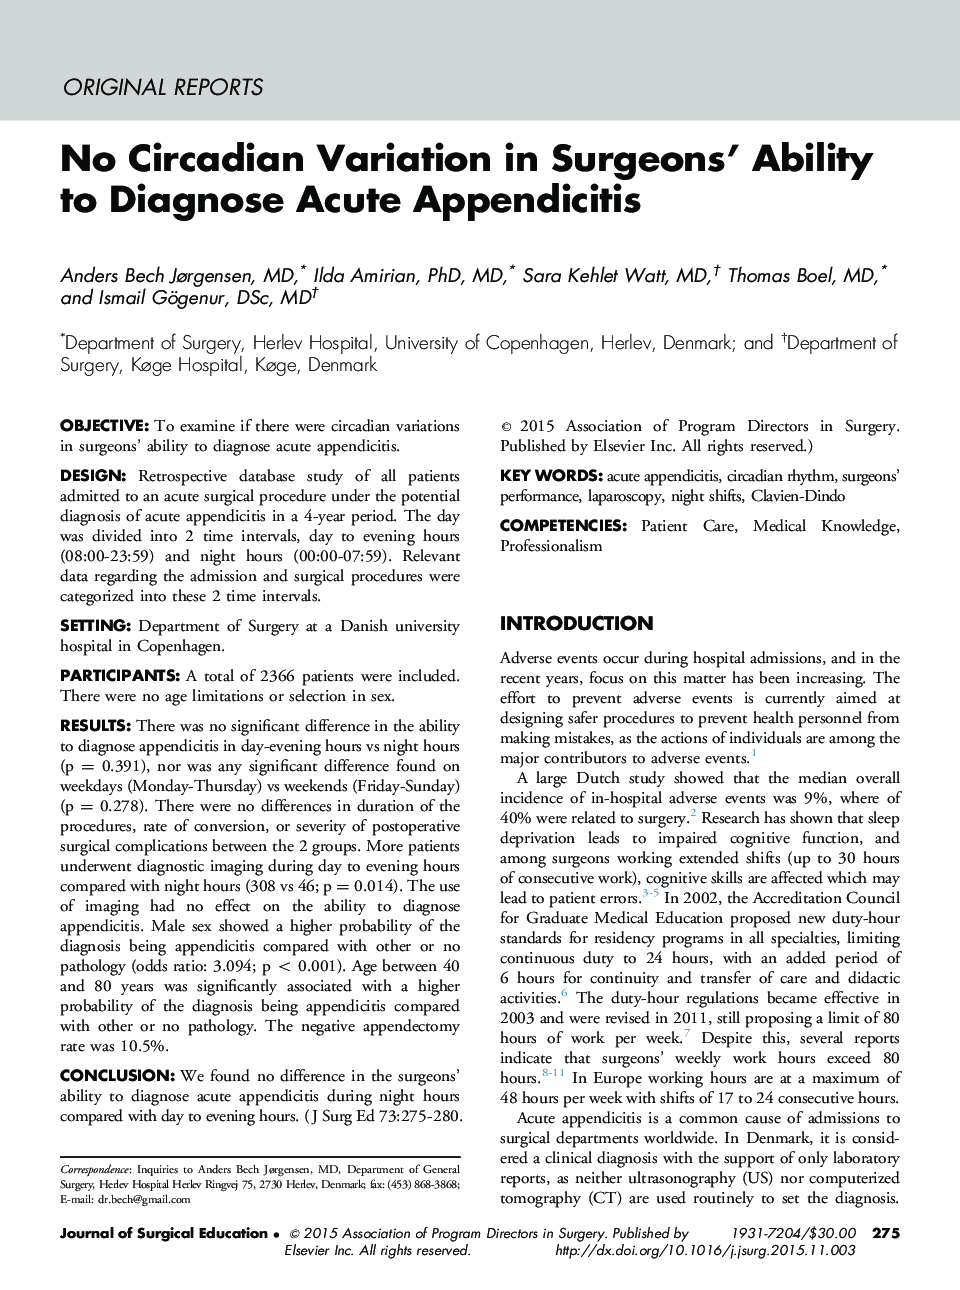 No Circadian Variation in Surgeons’ Ability to Diagnose Acute Appendicitis